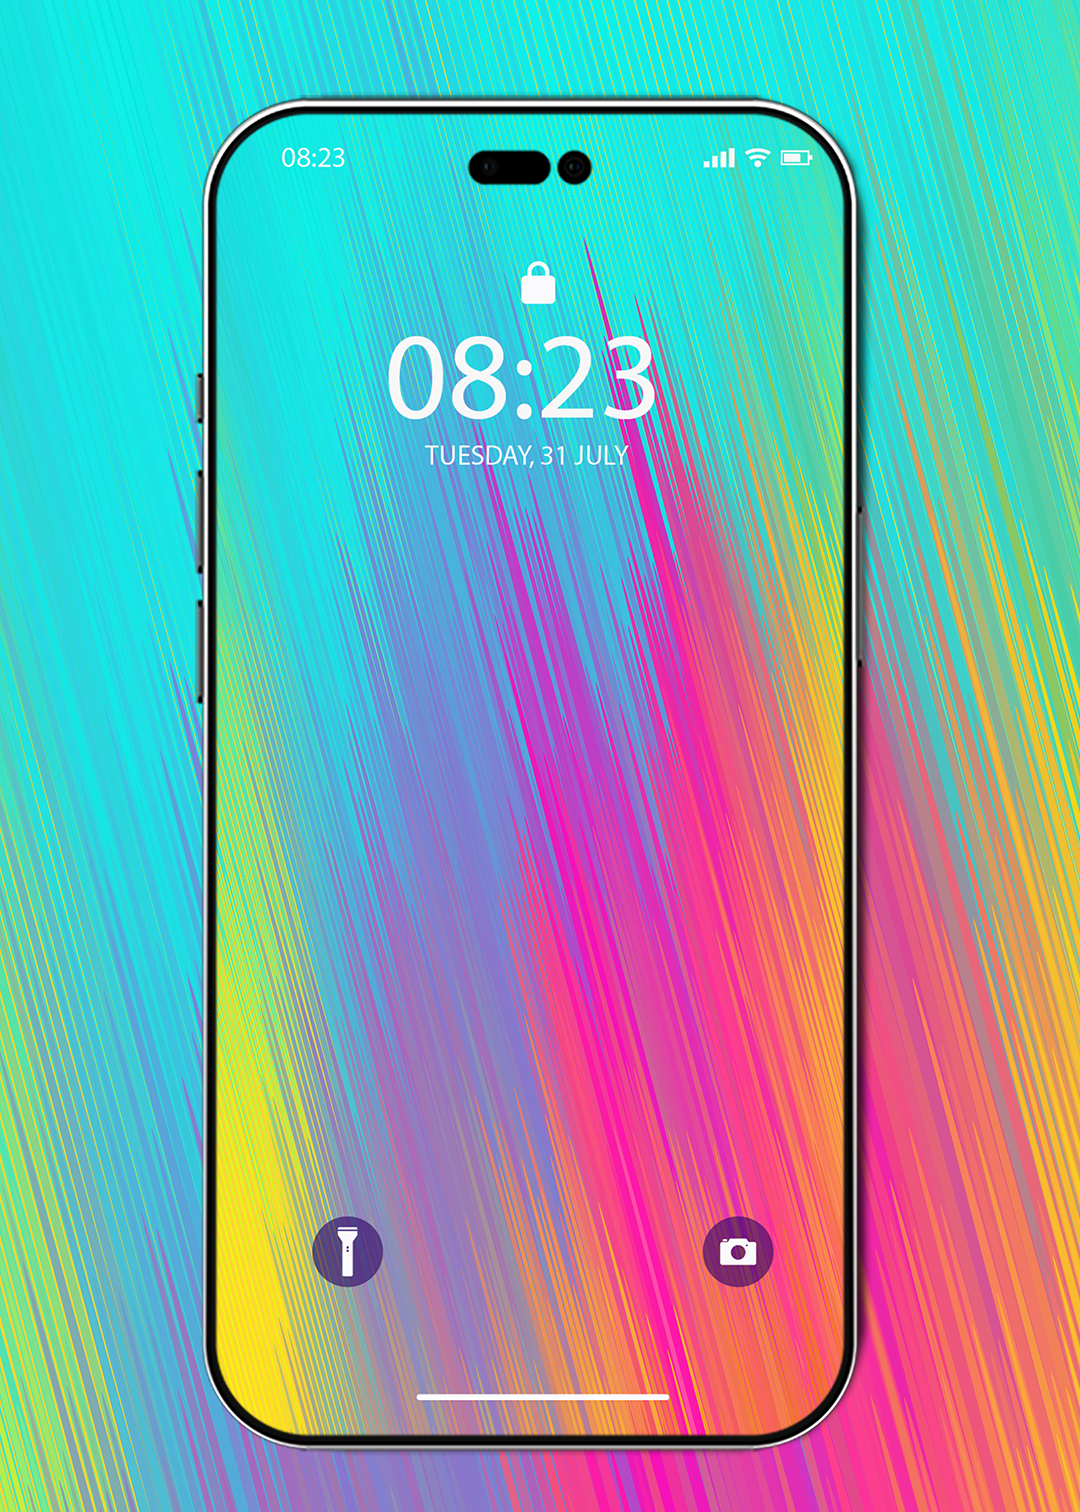 4k iphone wallpaper